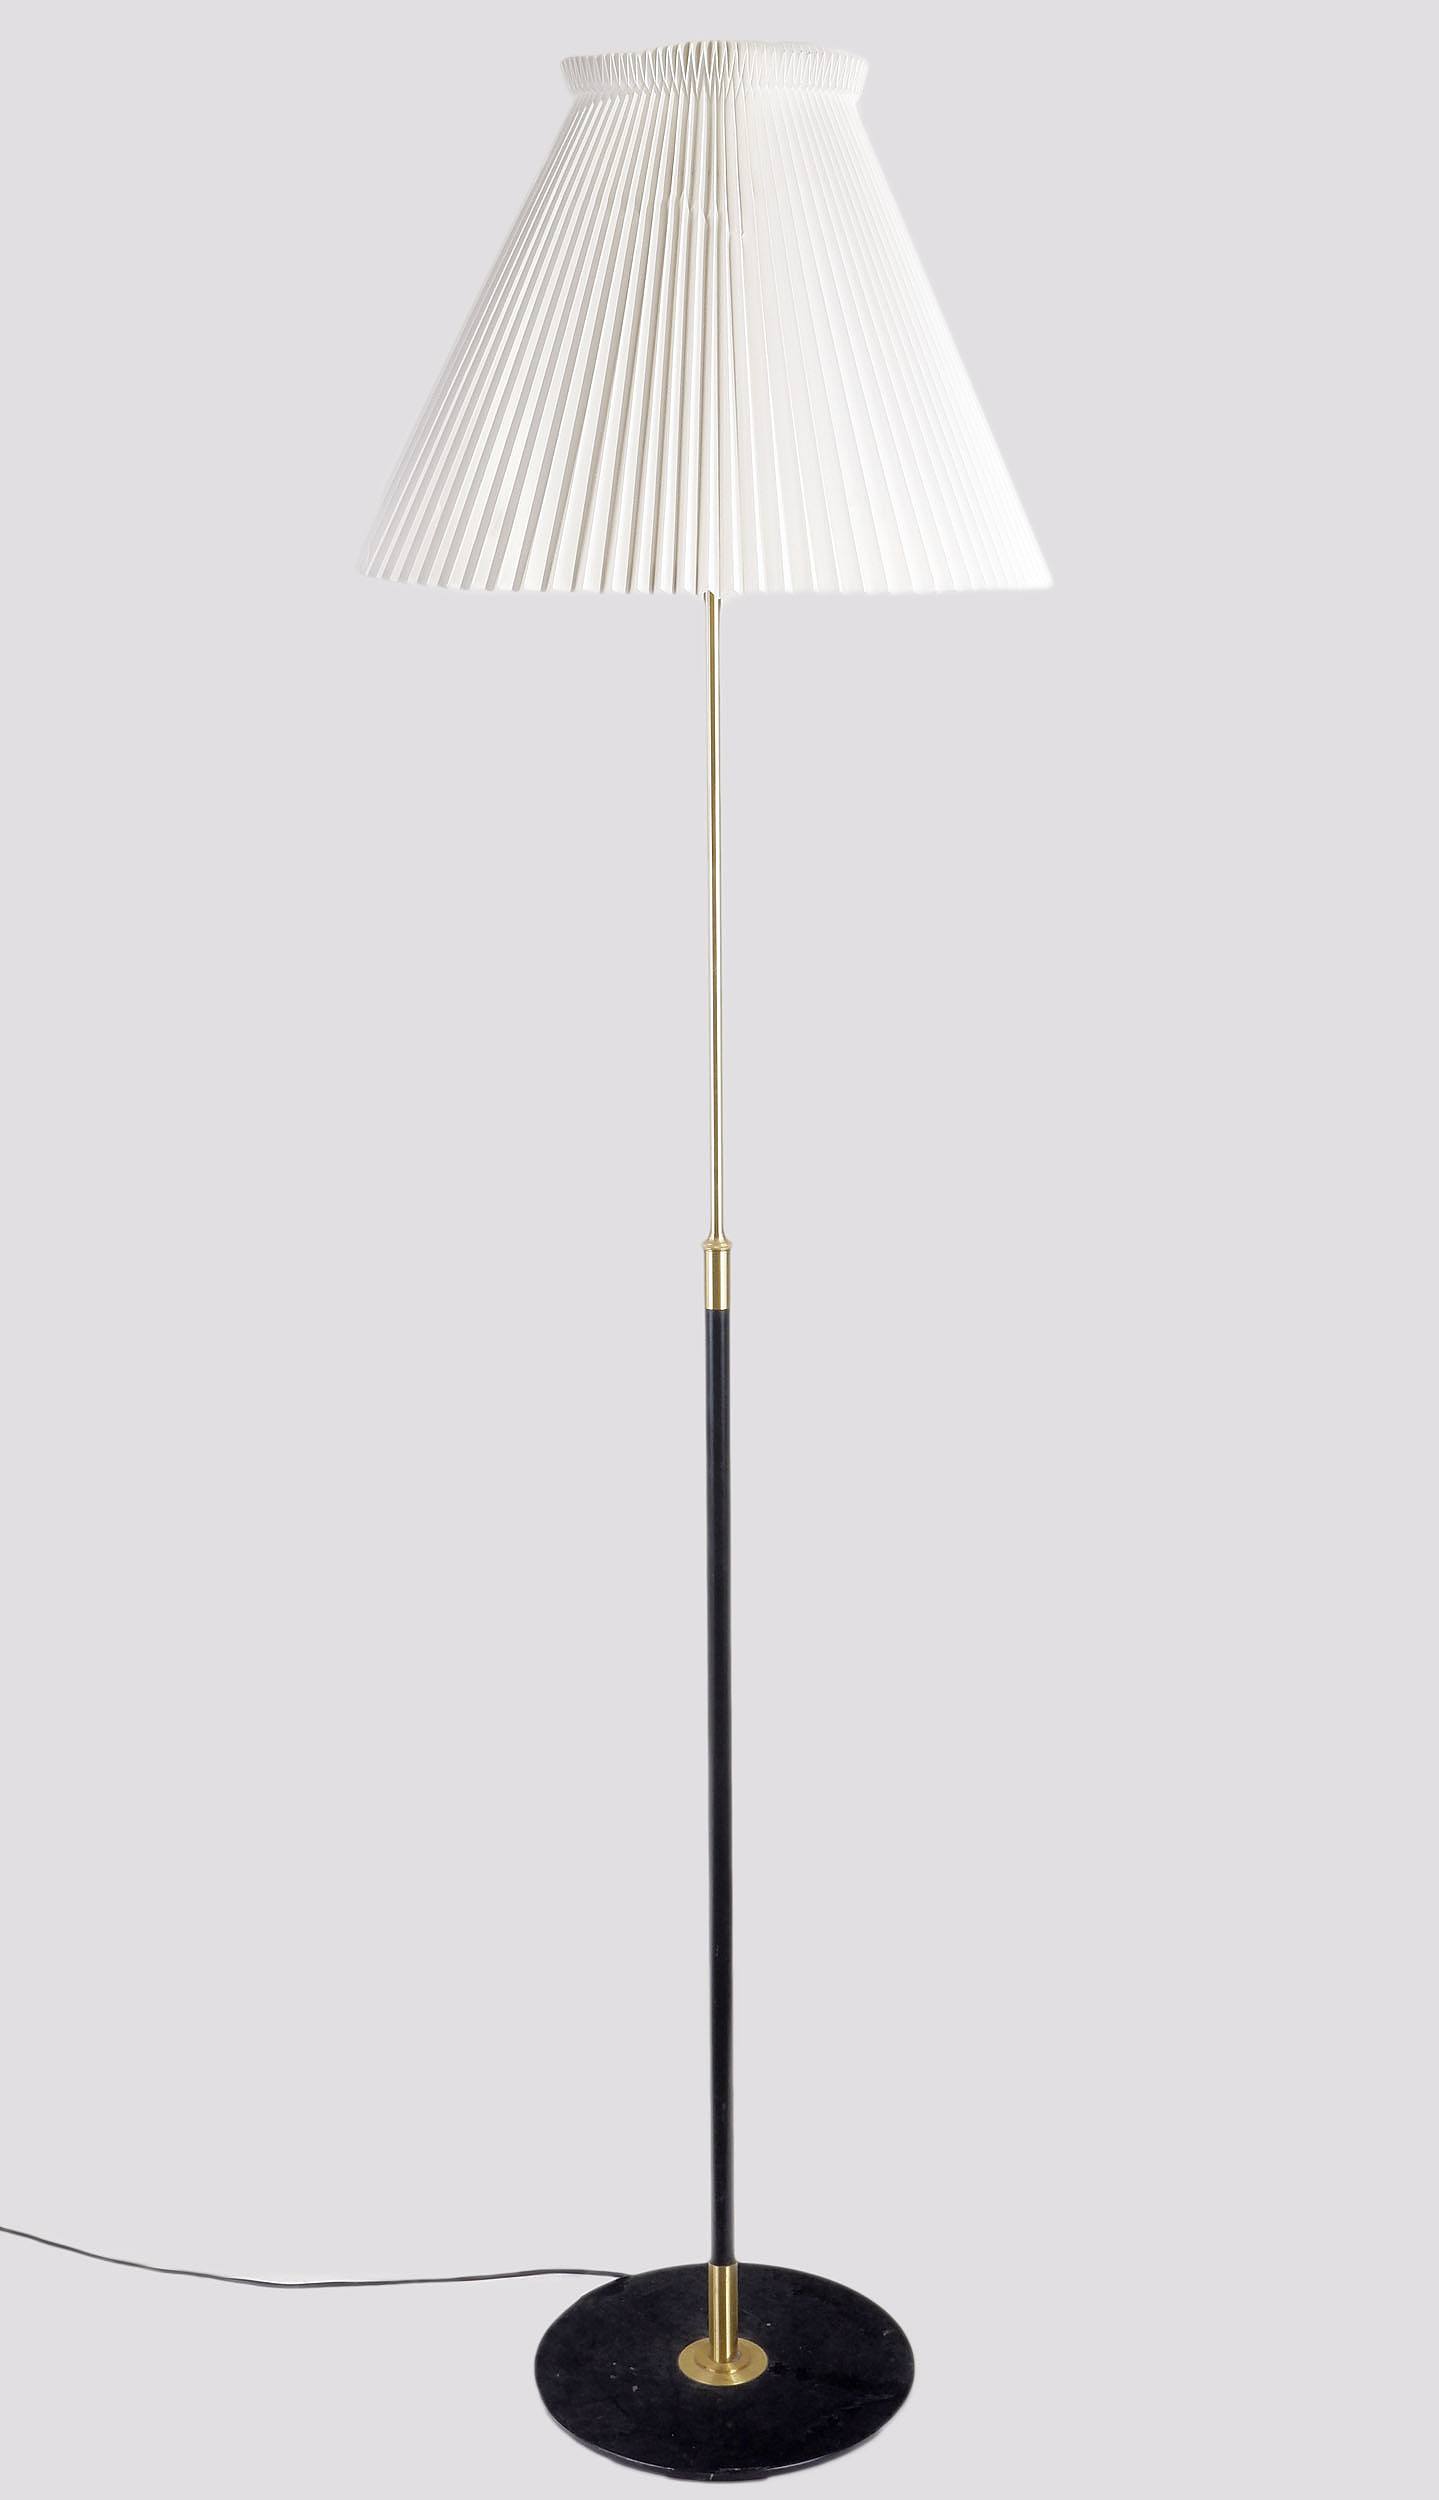 'Le Klint Denmark Standard Lamp'